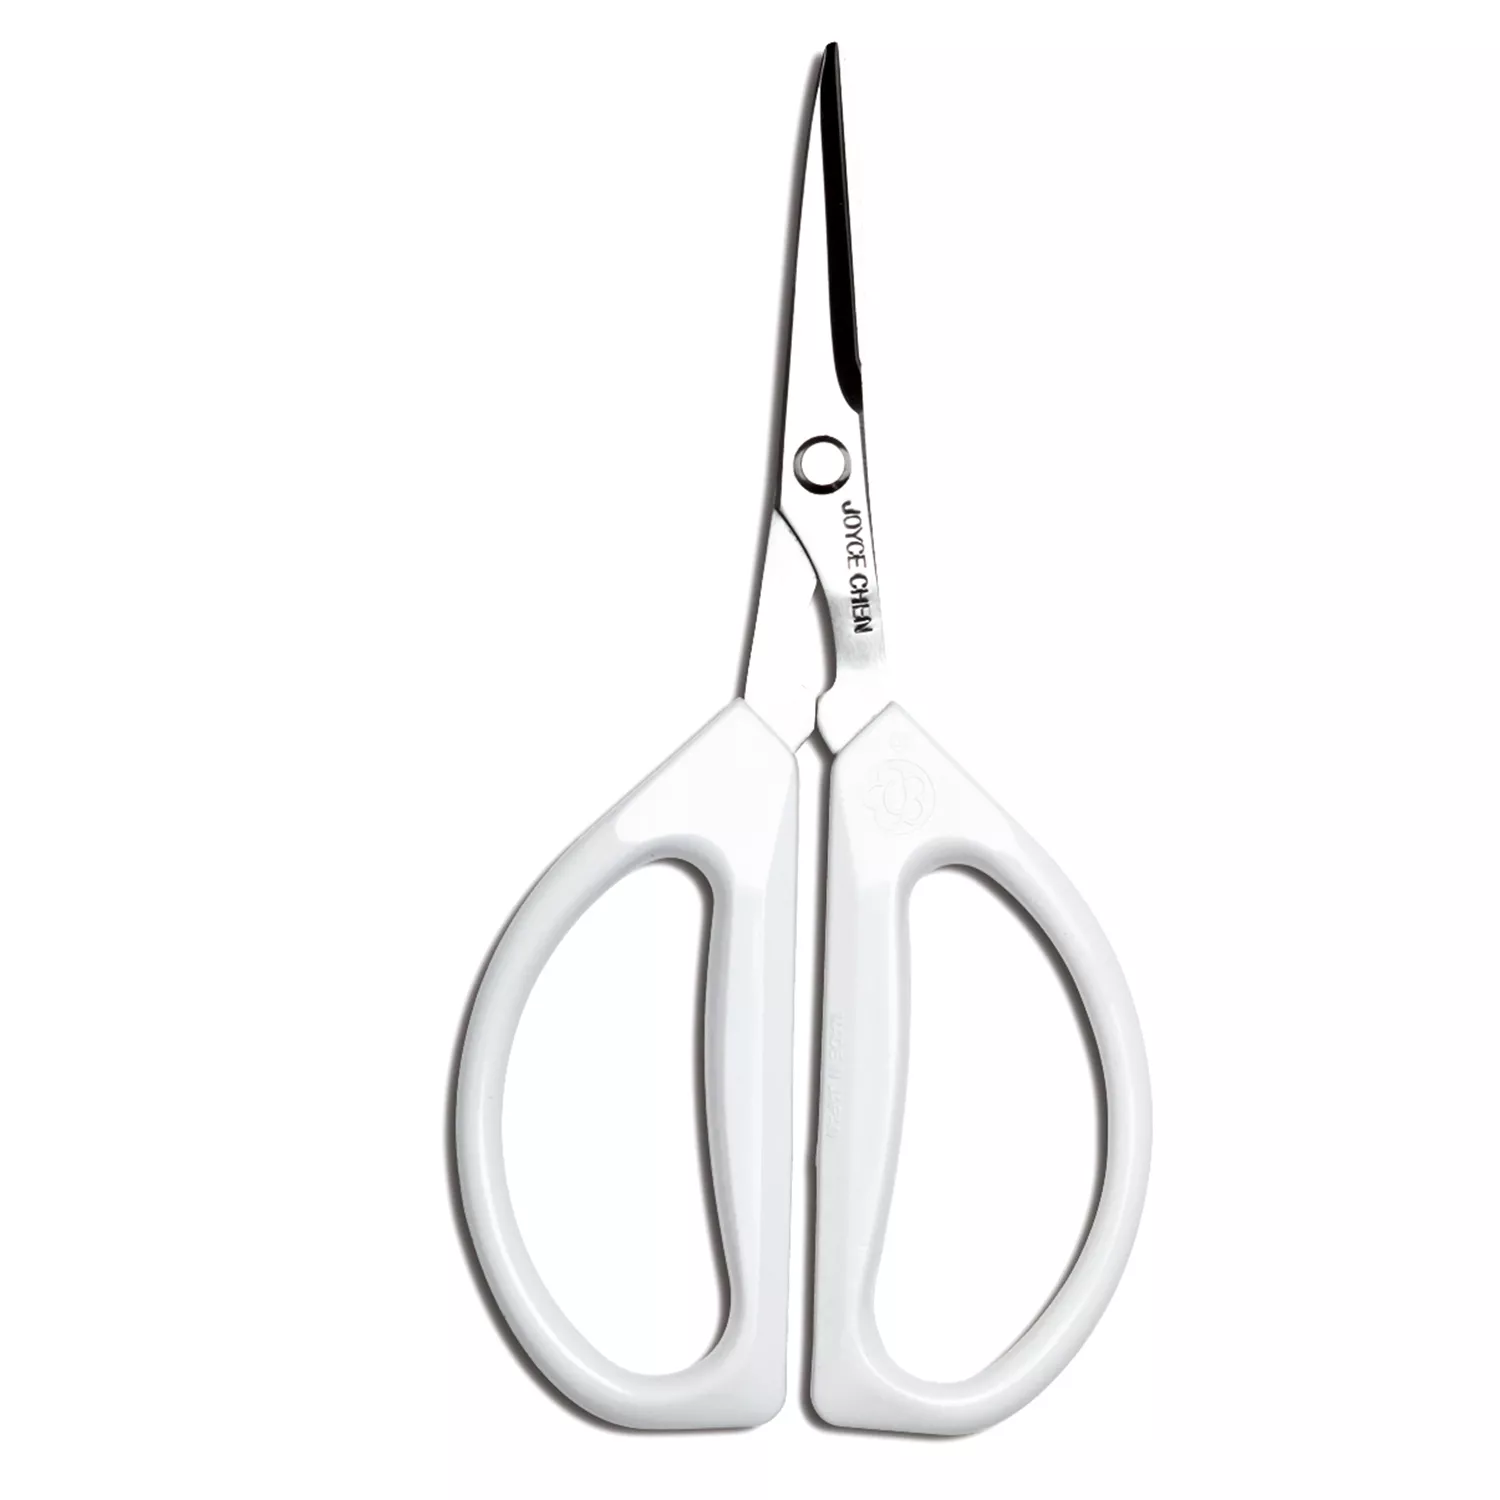 JB Prince on Instagram: Snip, trim, cut…. The Joyce Chen scissors